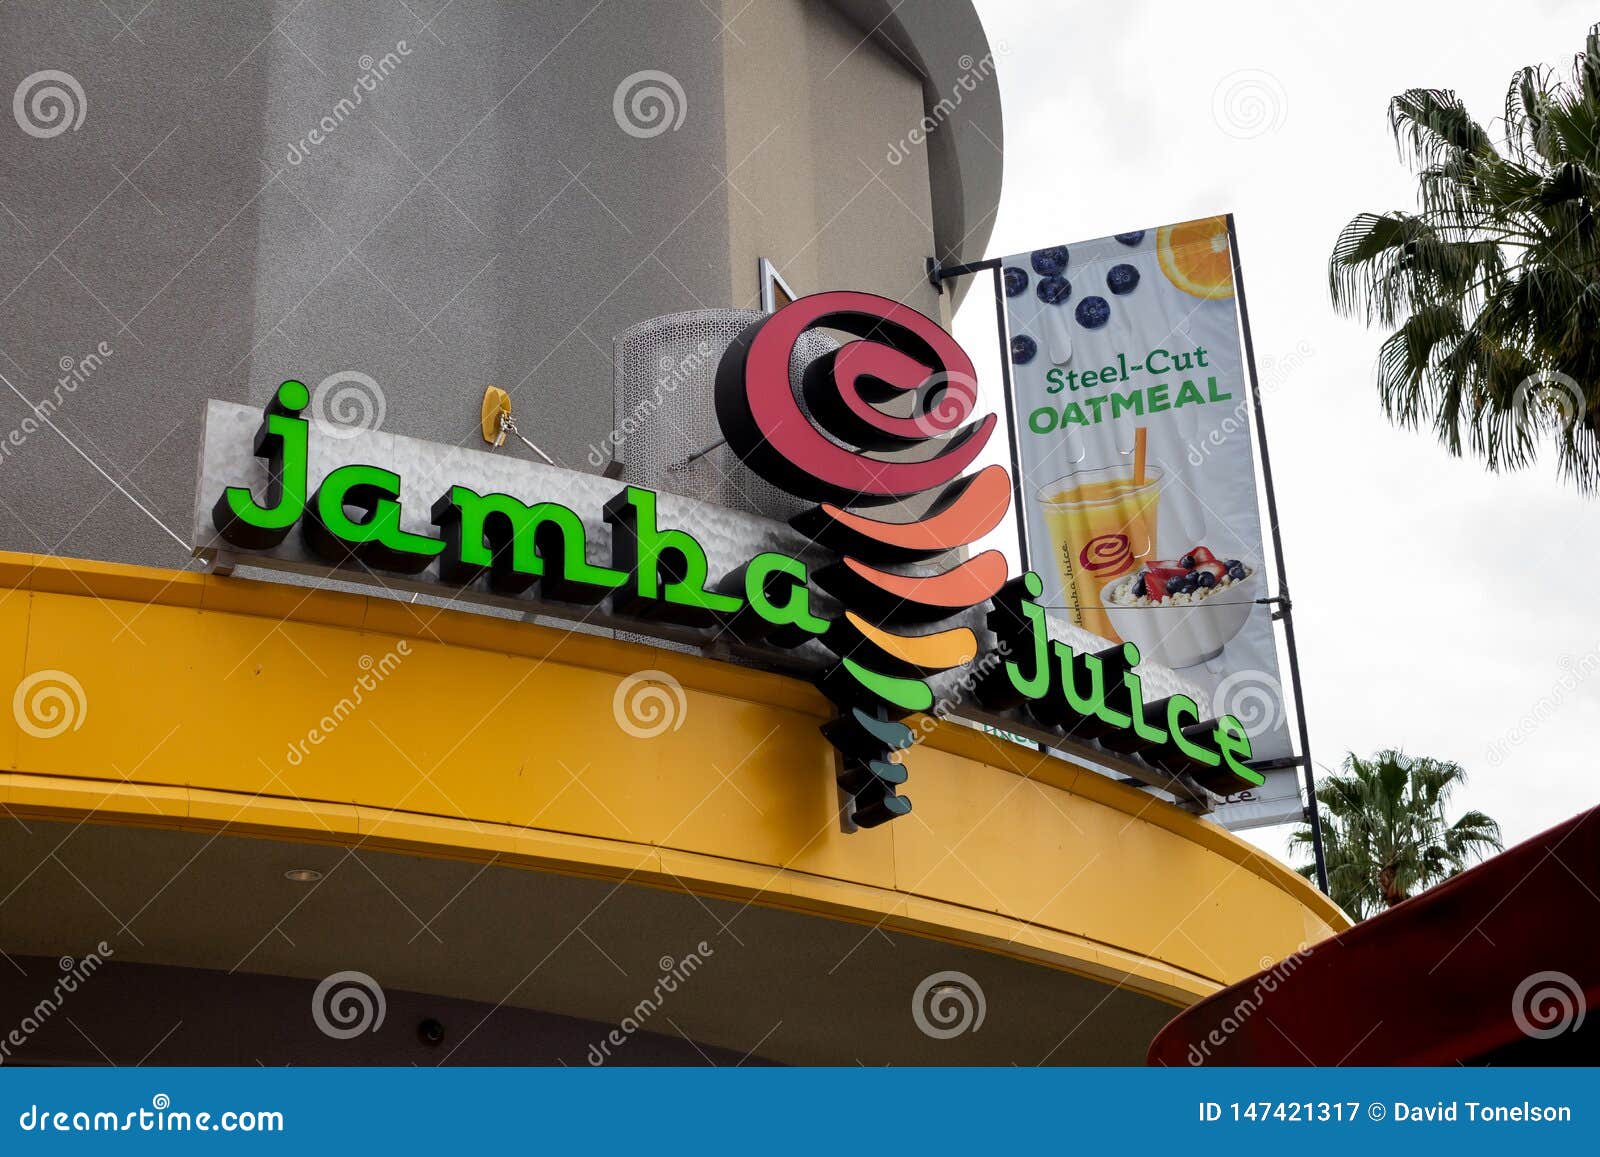 Jamba Juice Photos Free Royalty Free Stock Photos From Dreamstime